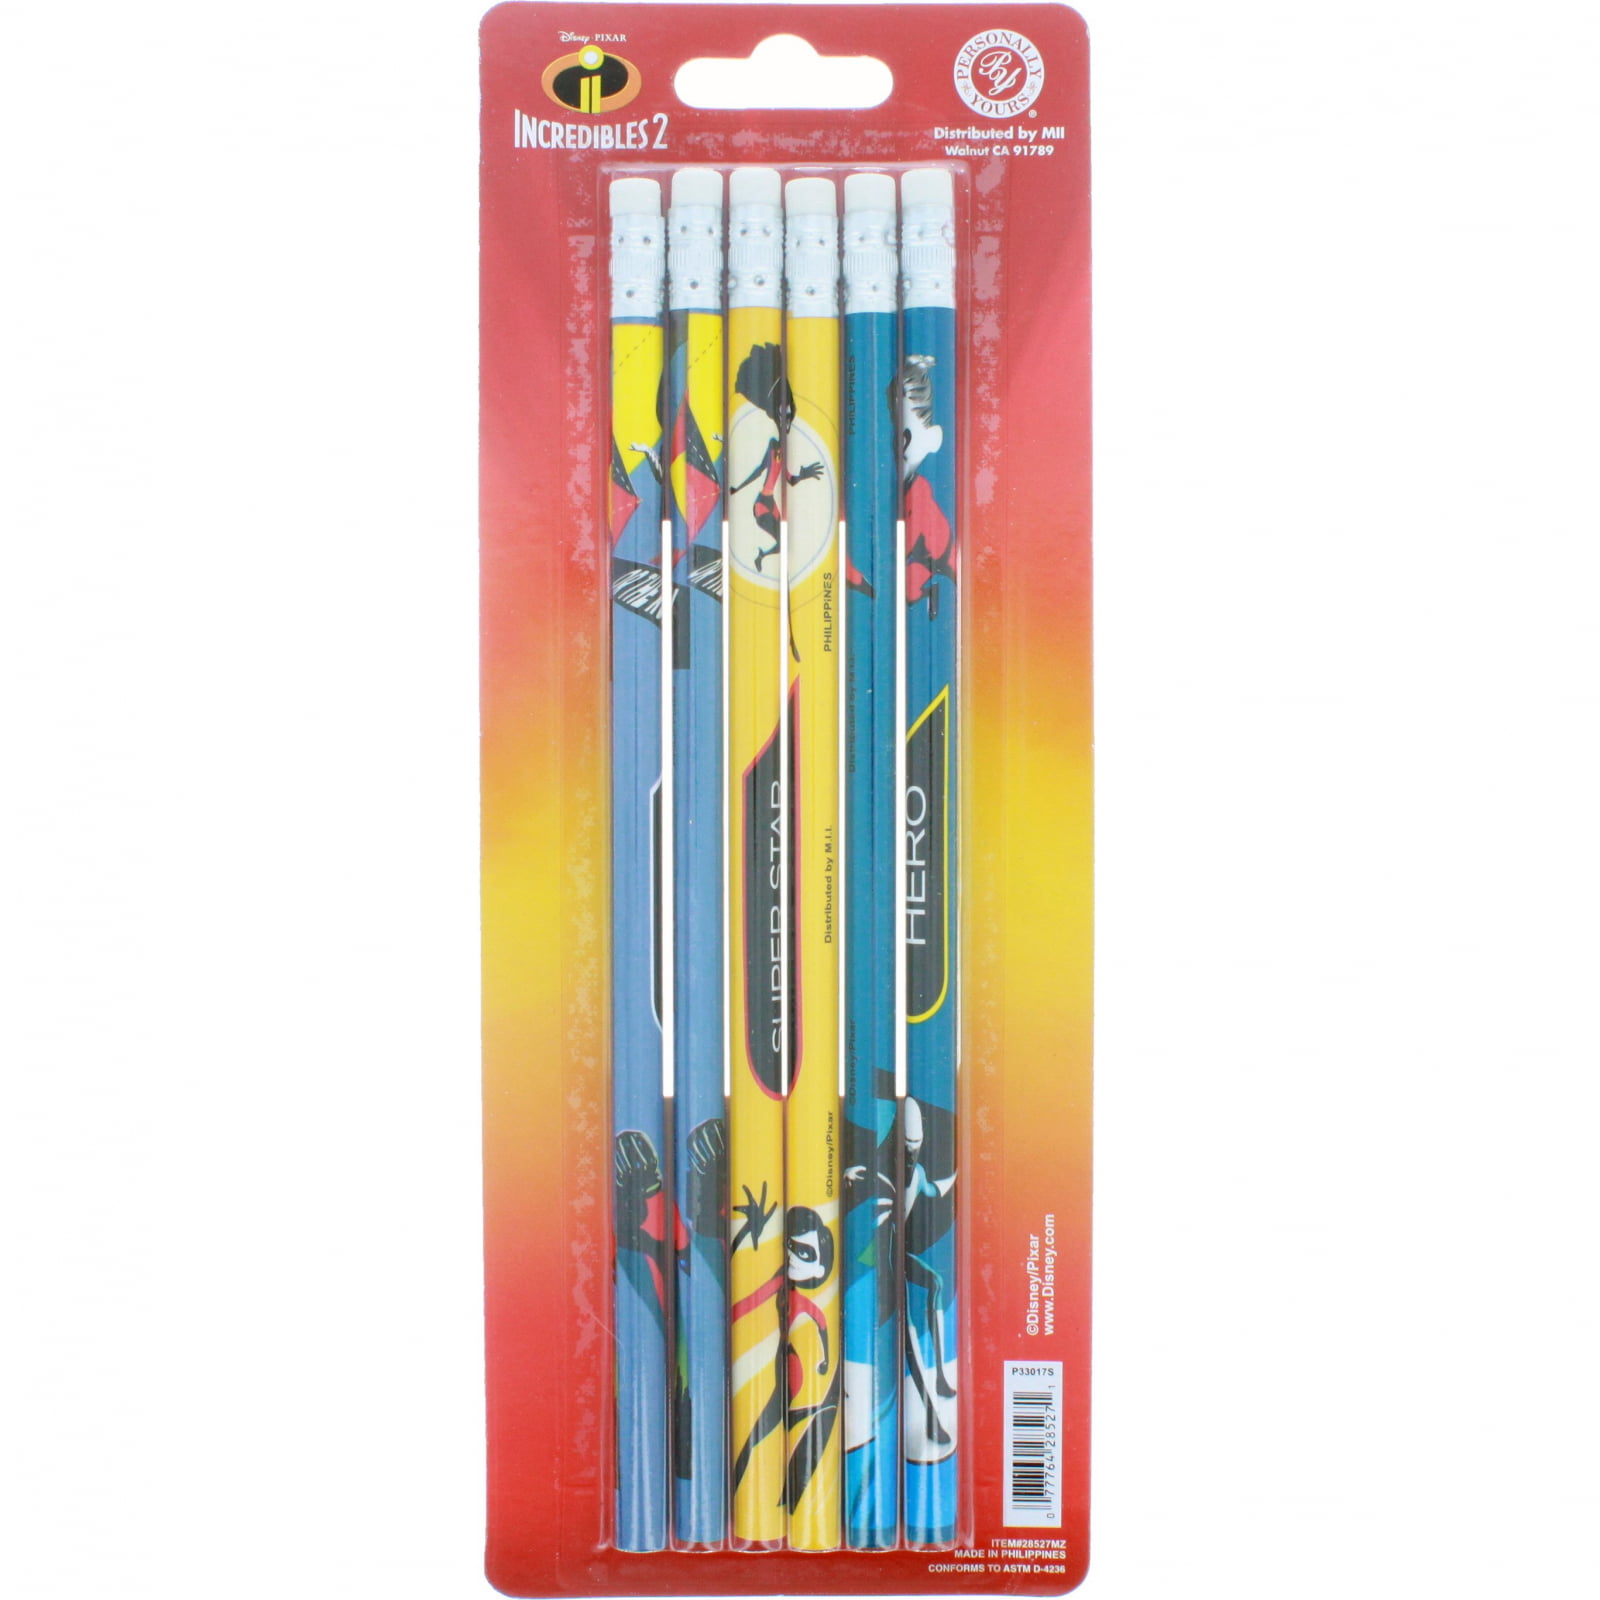 Disney Incredibles 2 Wooden Pencils School Supplies Pencils Party Favors 